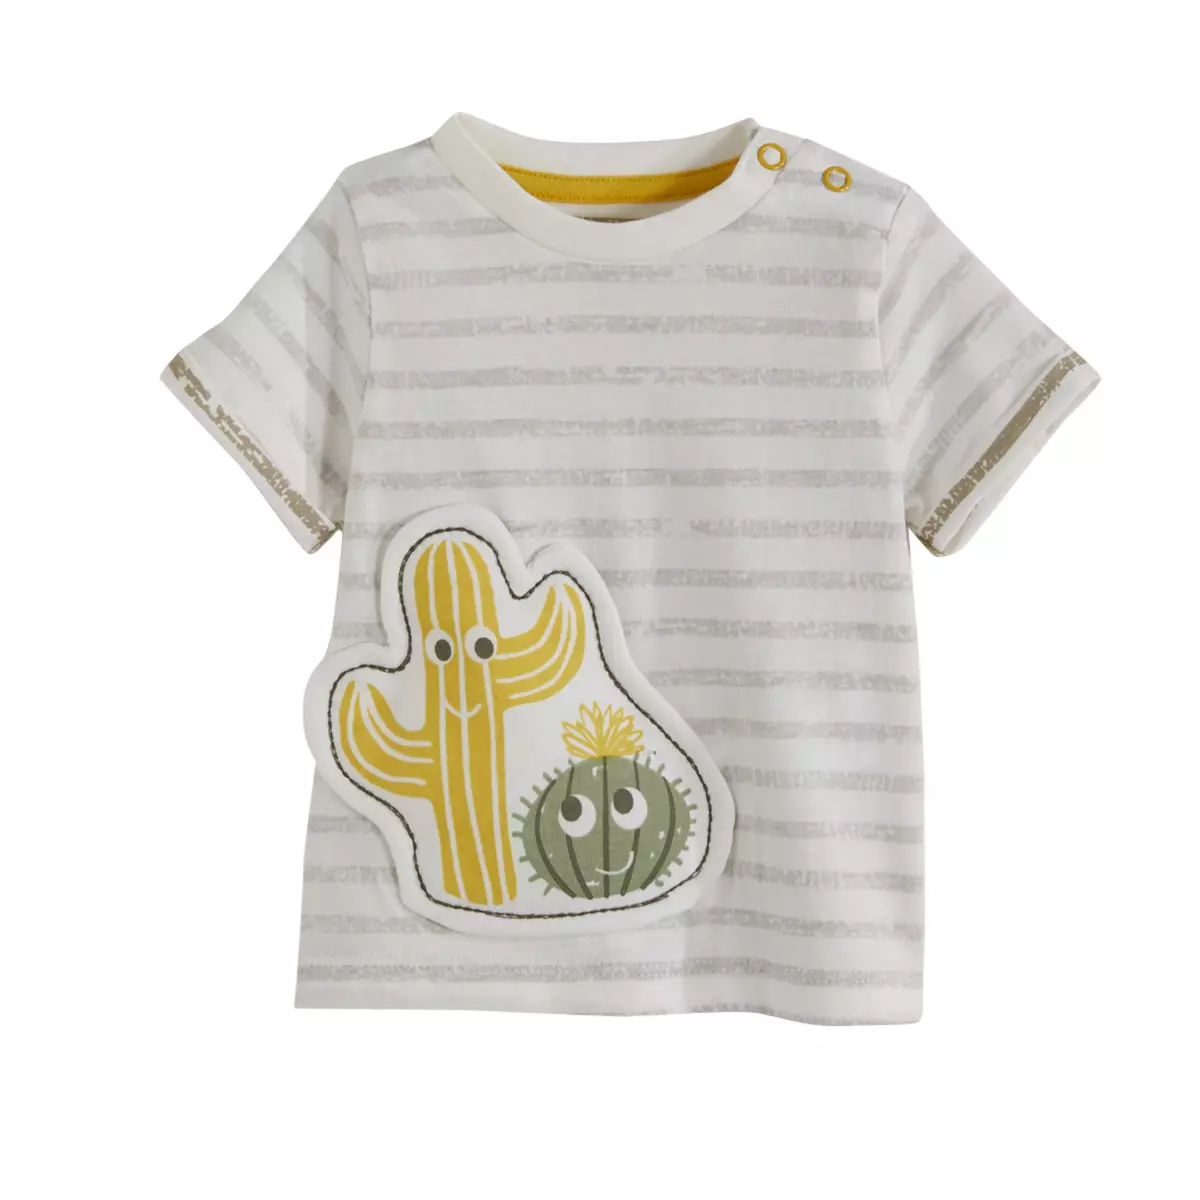 IN EXTENSO Tee-shirt cactus manches courtes bébé garçon